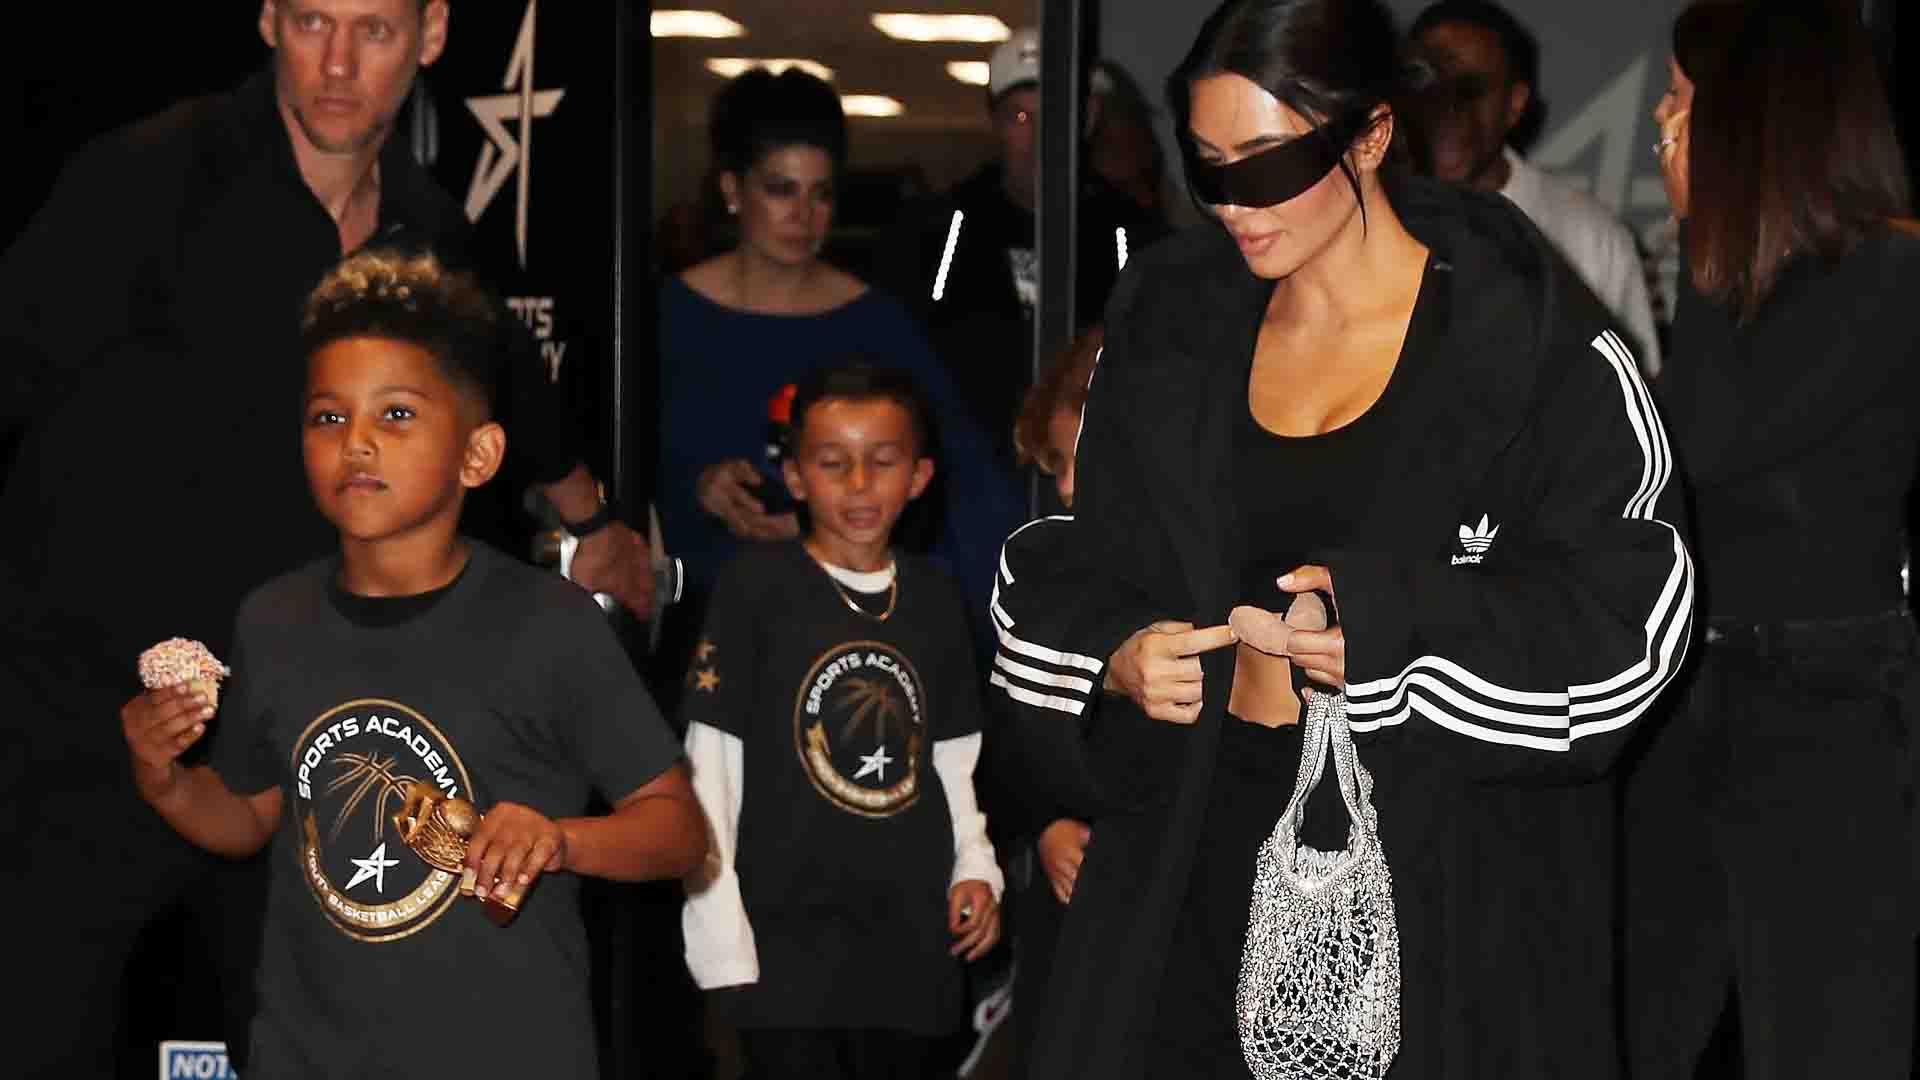 Kim Kardashian Spotted at Son “Saint’s” Basketball Game!